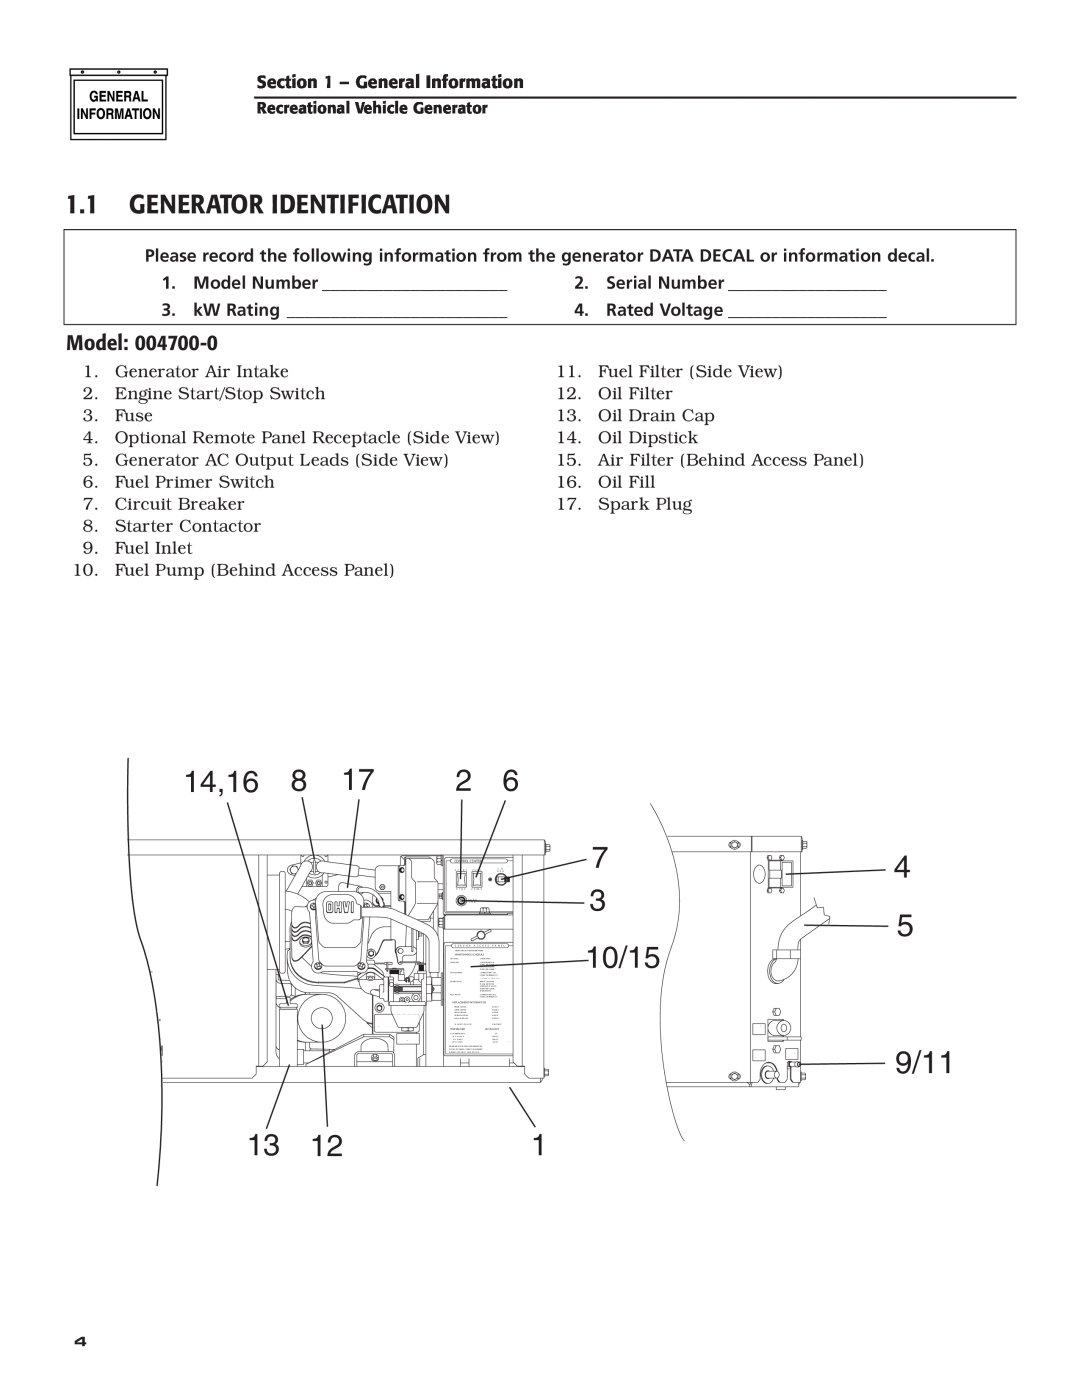 Generac Power Systems 004700-00 owner manual Generator Identification, Model, 14,16, 10/15 